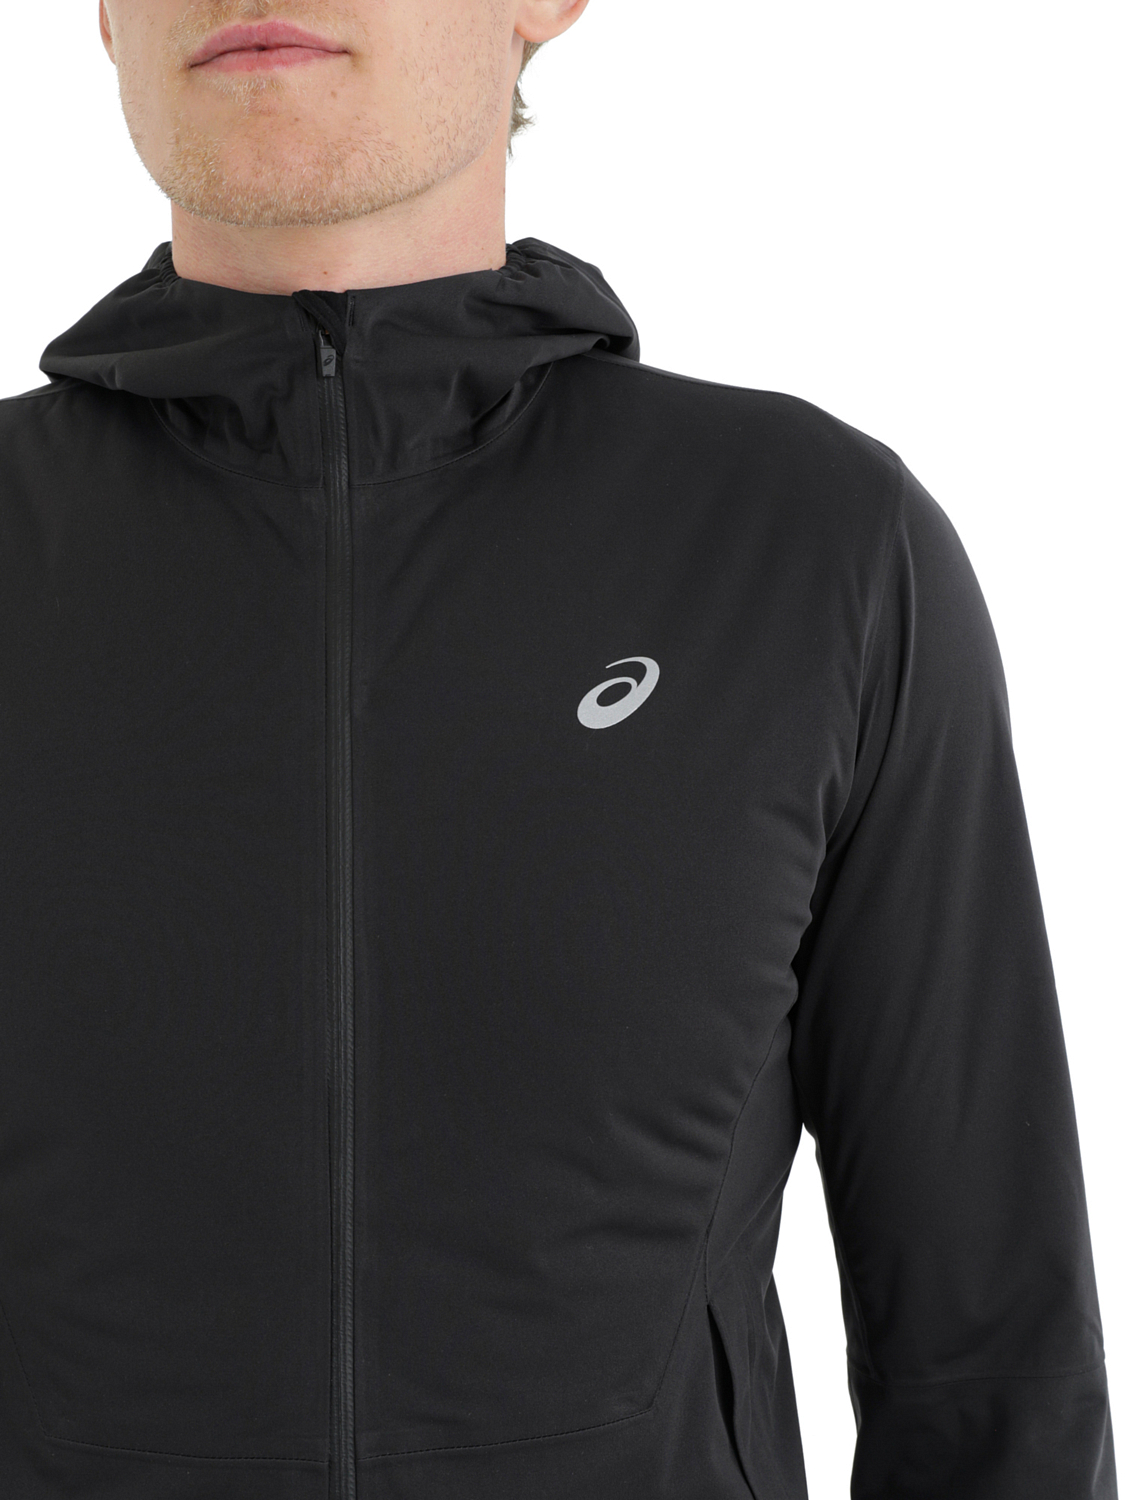 Куртка беговая Asics 2020-21 Winter Accelerate Jacket M Black